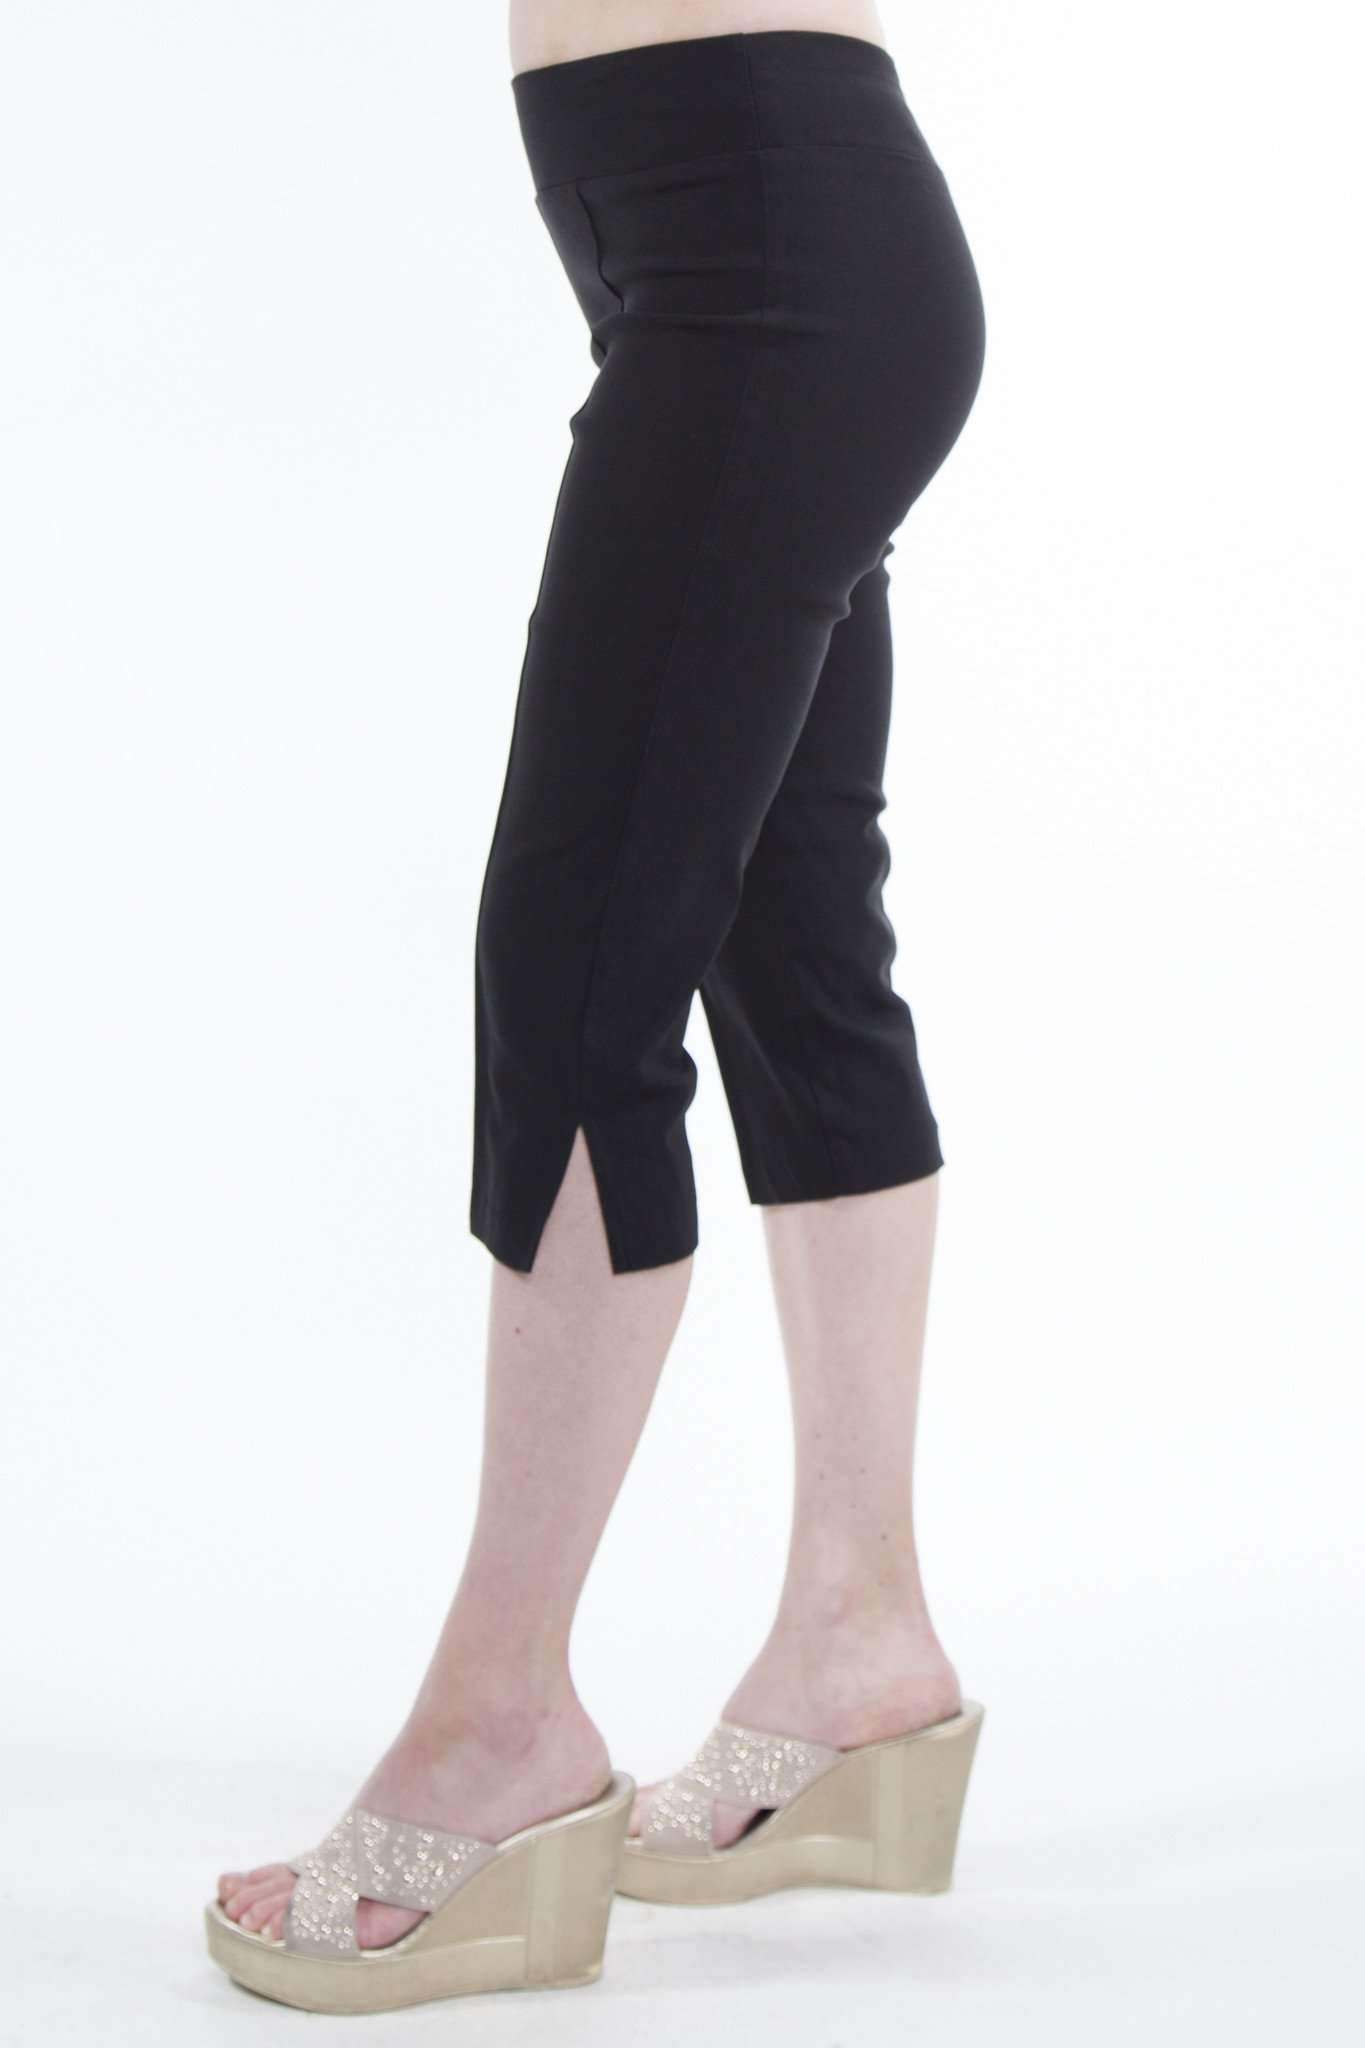 Women's Stretch Pull-On Capri Pants, Black